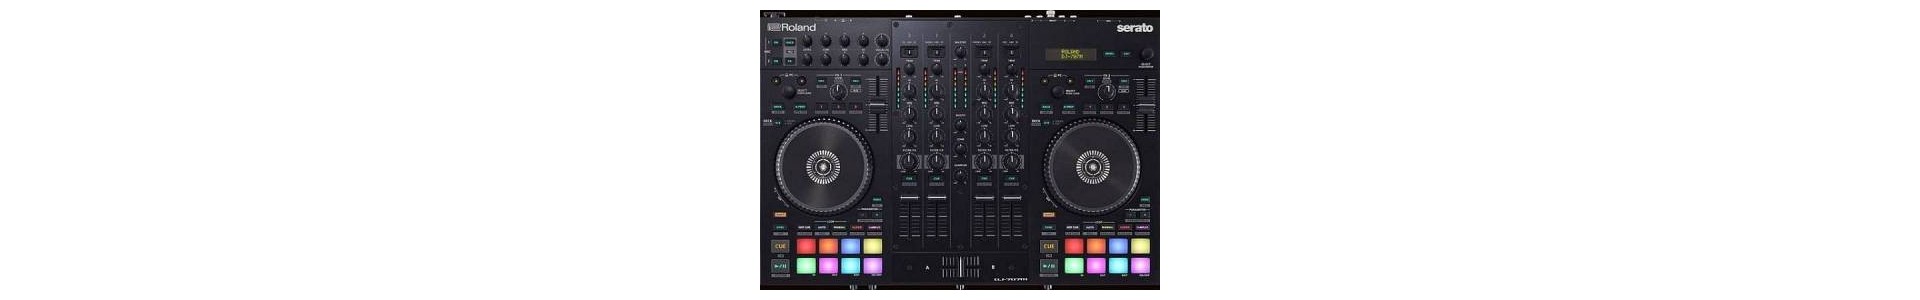 Consolle / Controller per DJ